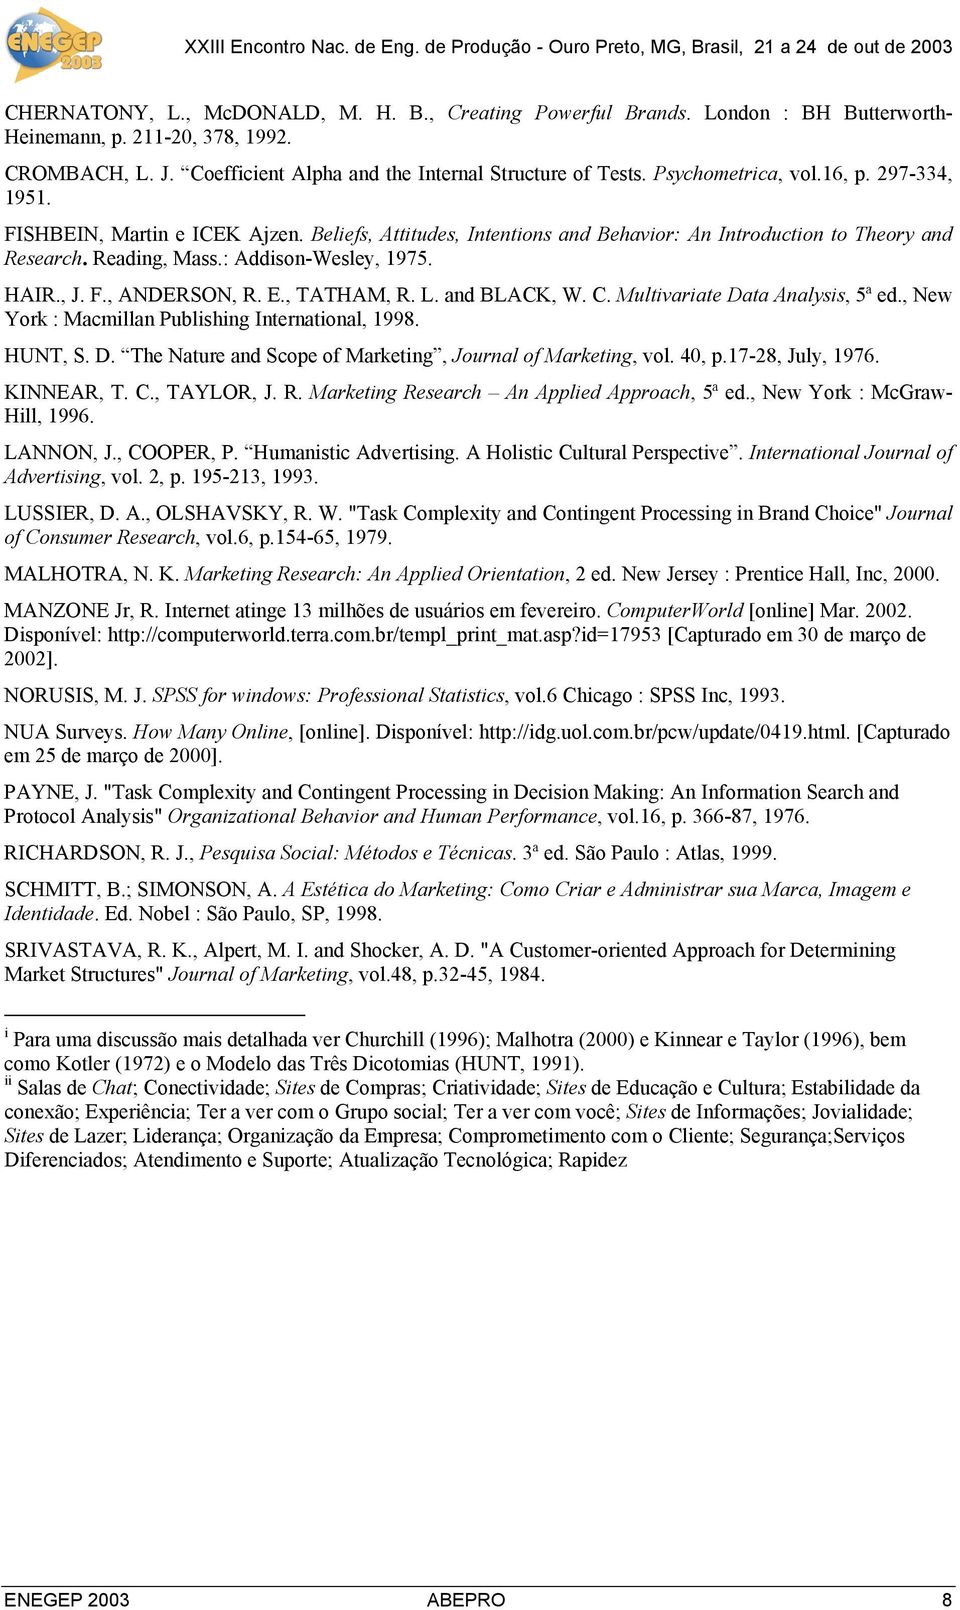 , J. F., ANDERSON, R. E., TATHAM, R. L. and BLACK, W. C. Multivariate Data Analysis, 5ª ed., New York : Macmillan Publishing International, 1998. HUNT, S. D. The Nature and Scope of Marketing, Journal of Marketing, vol.